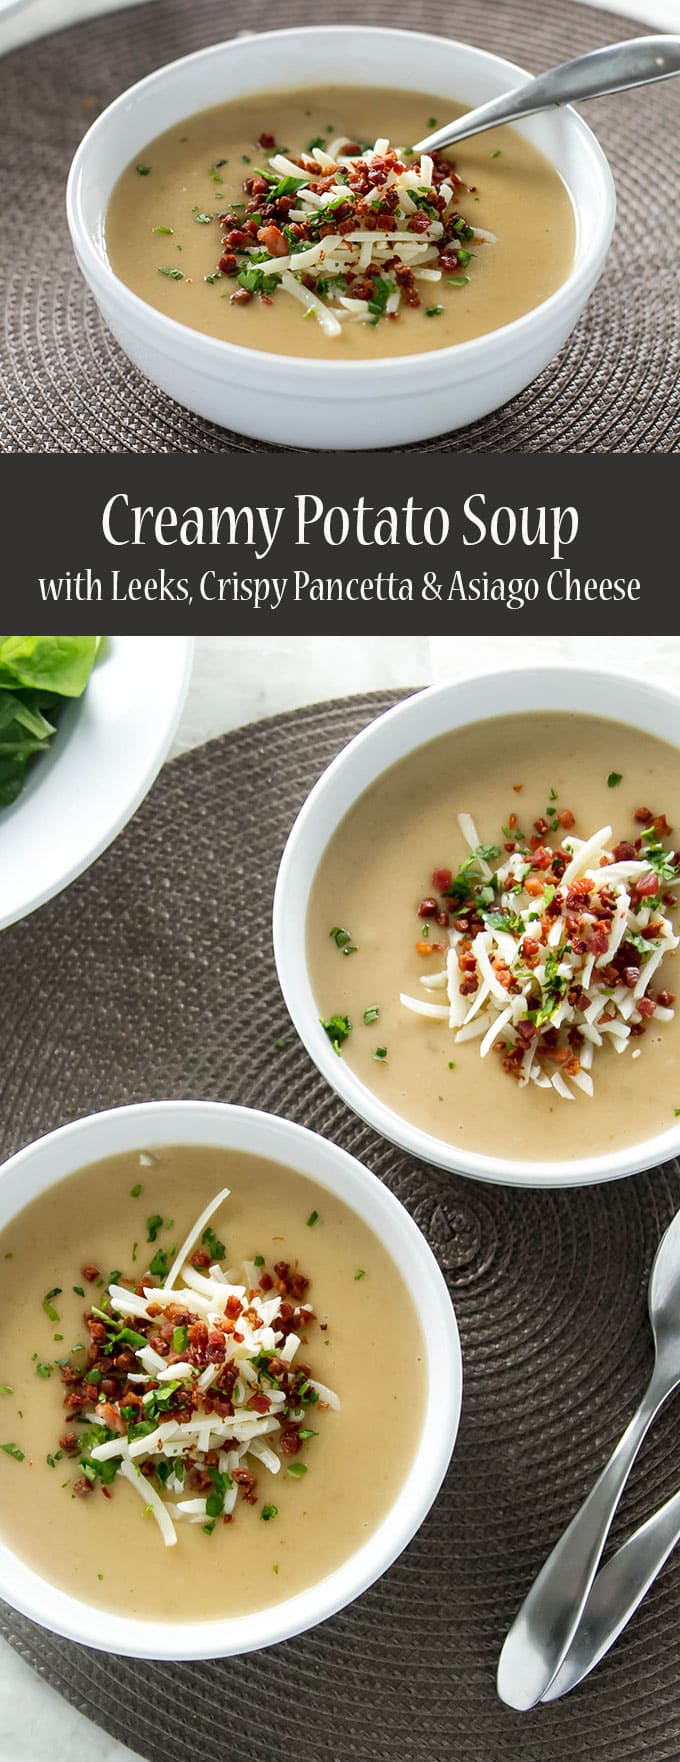 Creamy Potato Soup with Crispy Pancetta | girlgonegourmet.com